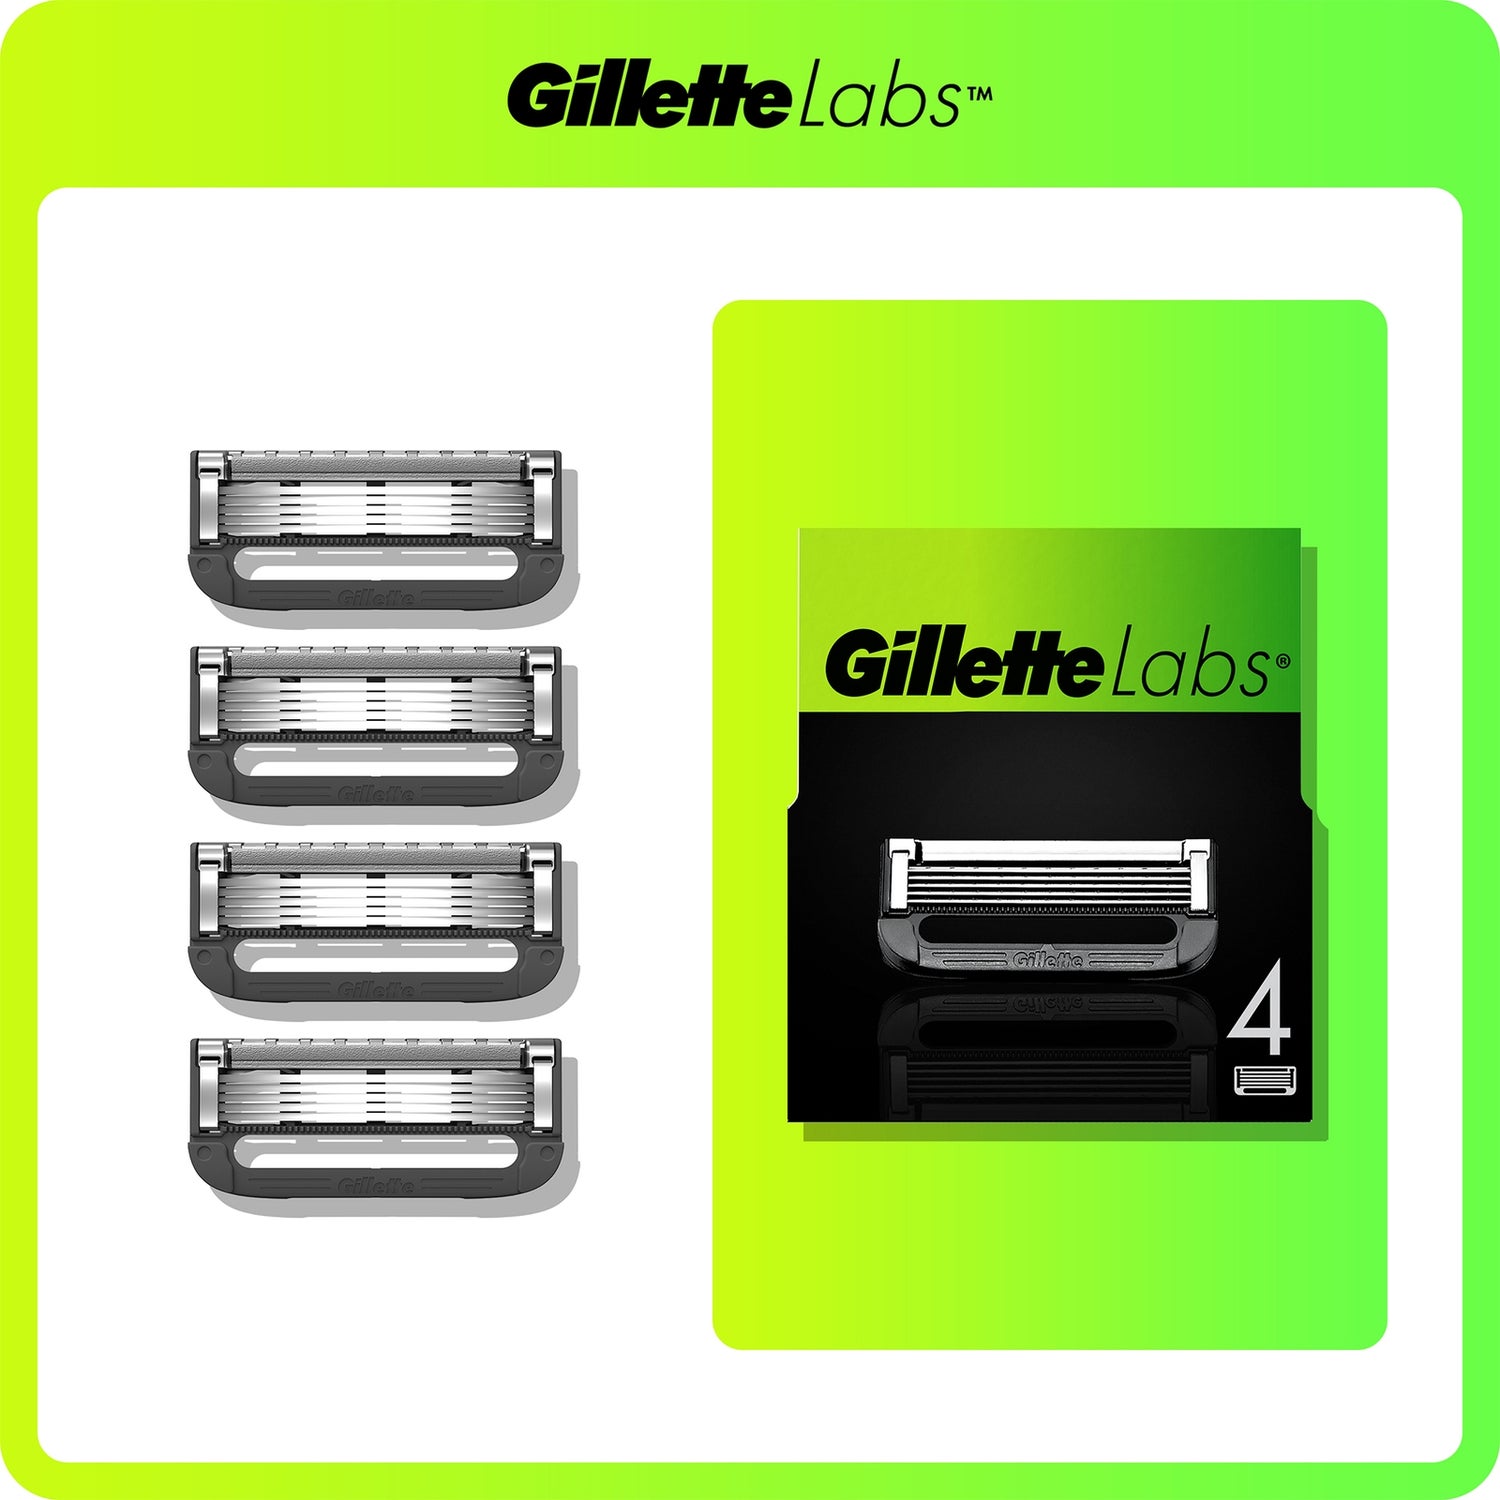 Gillette Labs Razor Blades Refill Packs